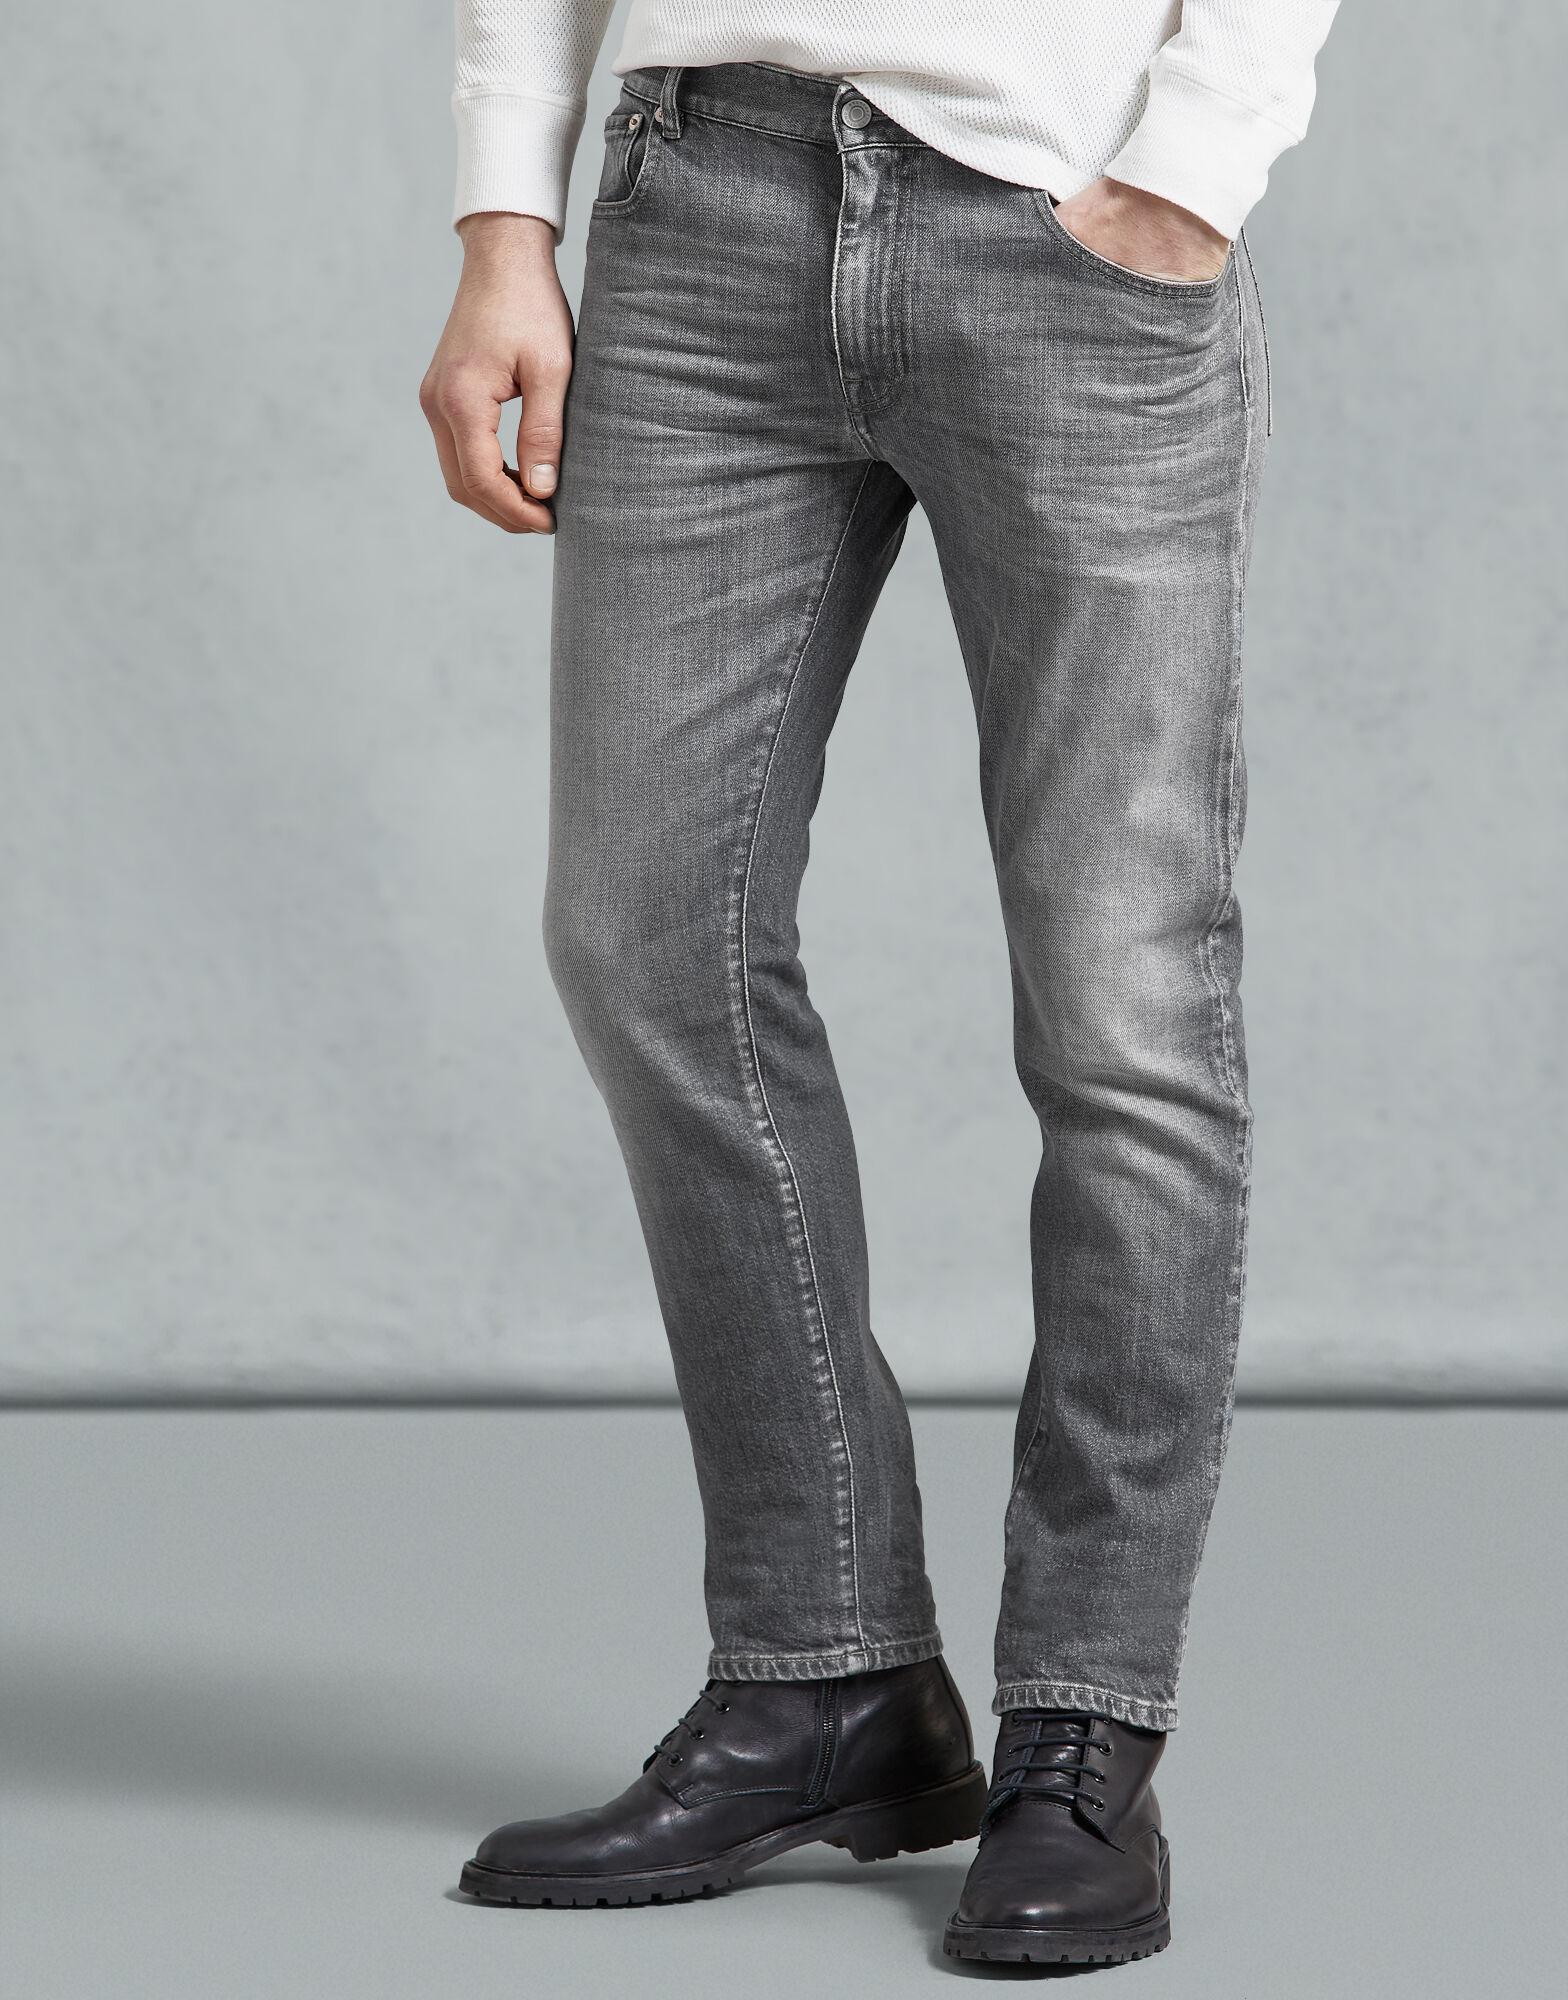 Belstaff Denim Longton Washed Grey Slim Jeans in Gray for Men - Lyst